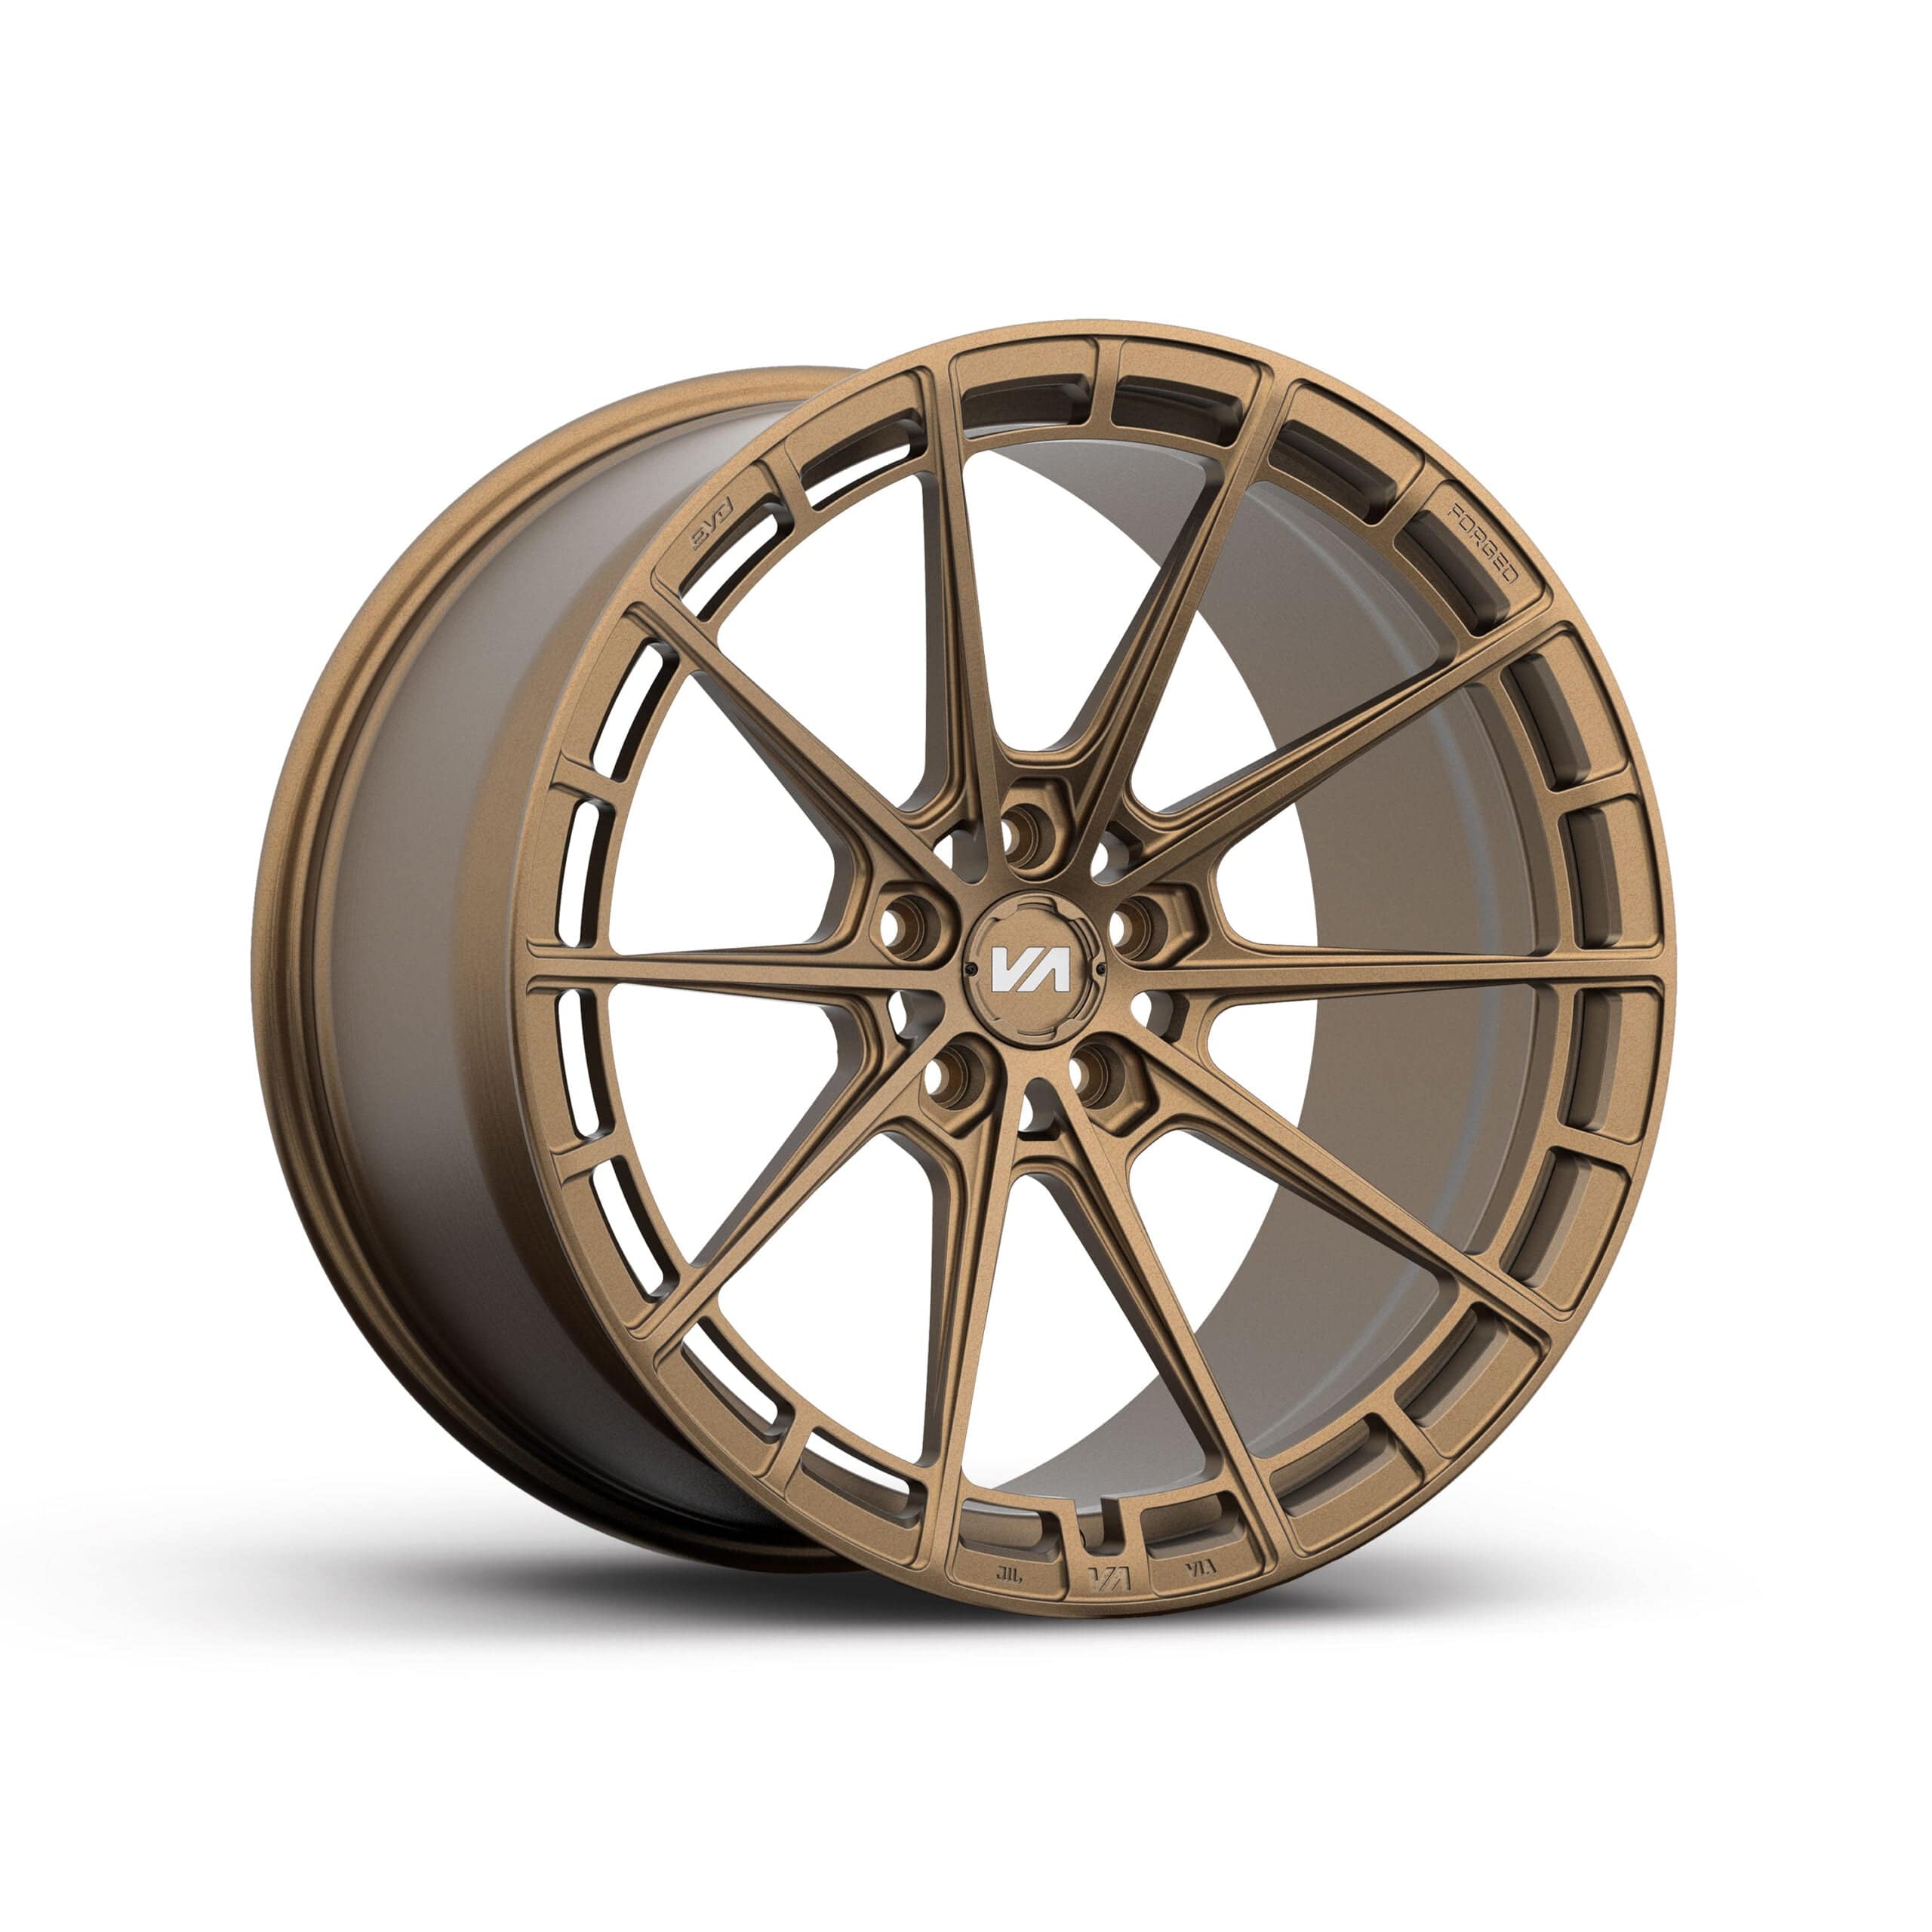 Kies-Motorsports Variant Variant™ Aure Collection Alloy Wheels 19x10